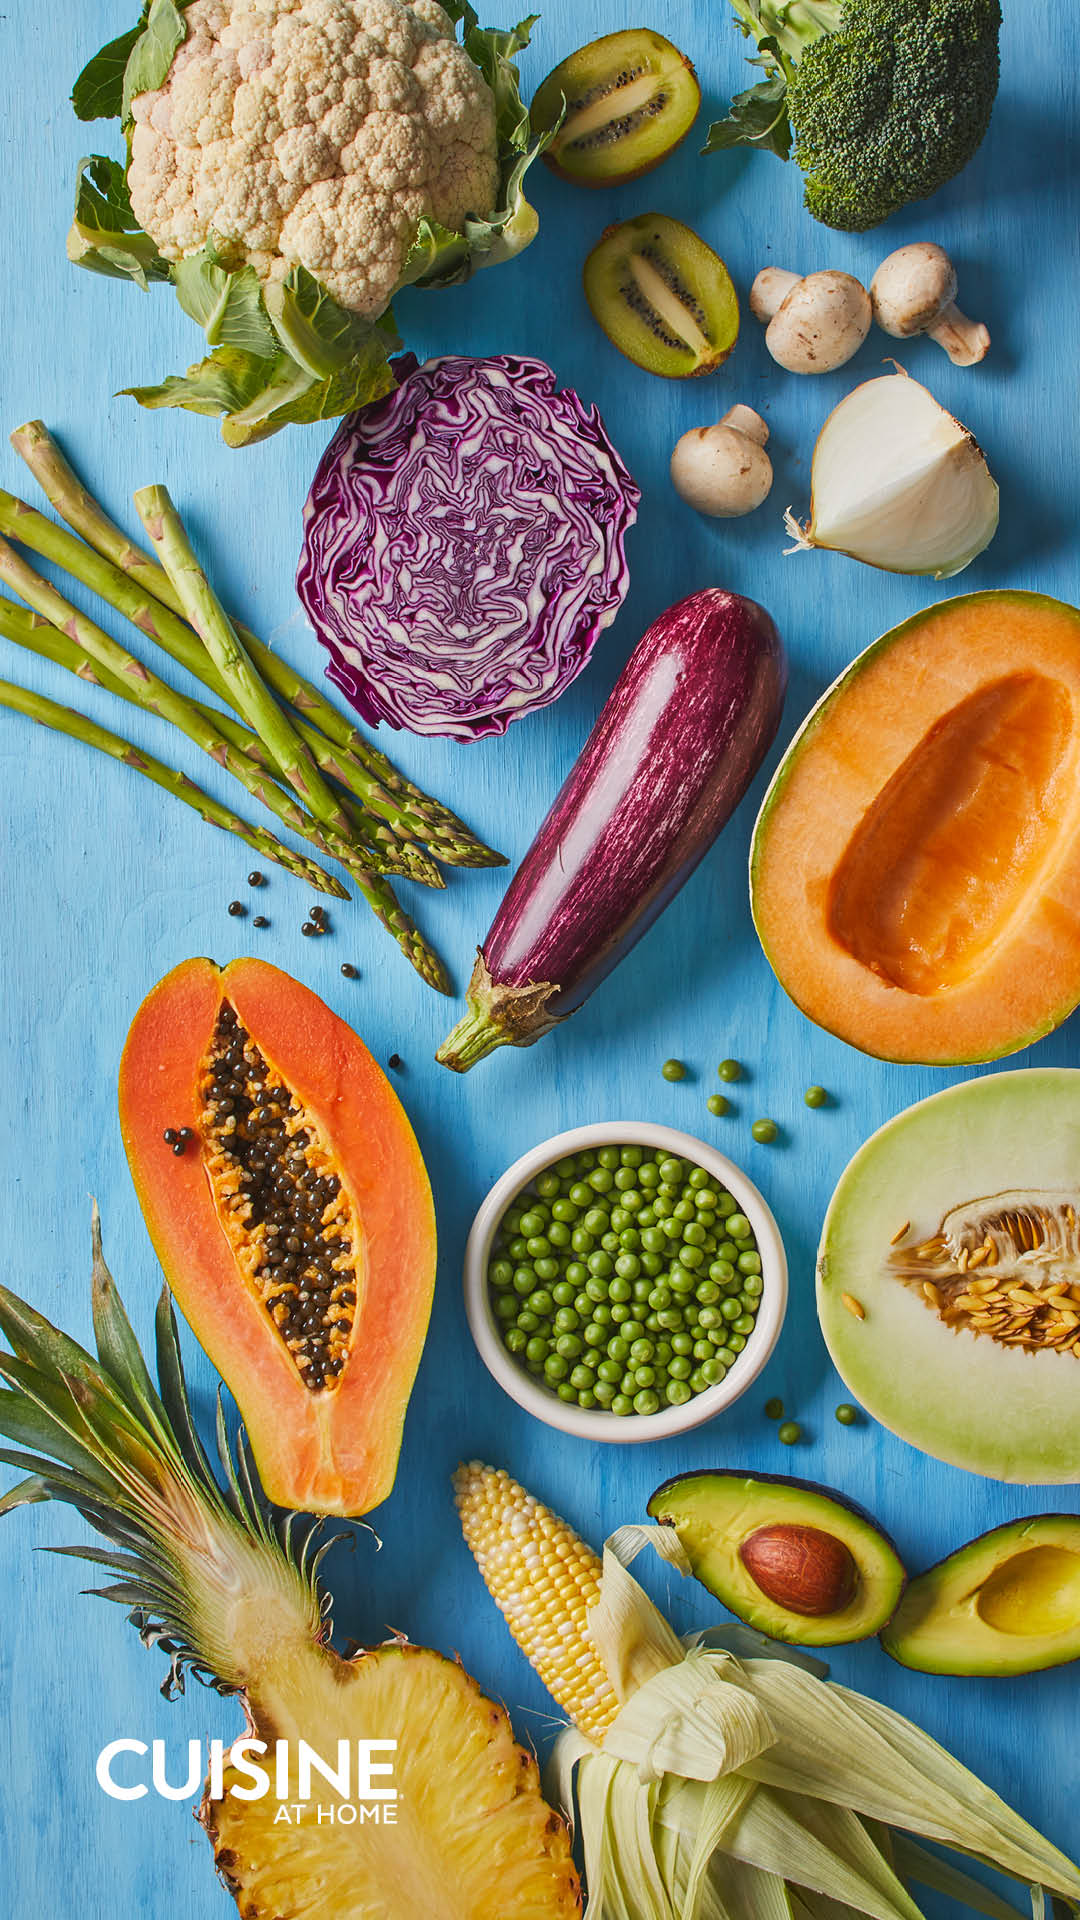 Free Mobile Wallpaper - June 2021 - Cuisine at Home - Summer fruit vegetables eggplant papaya colorful cooking food aesthetic